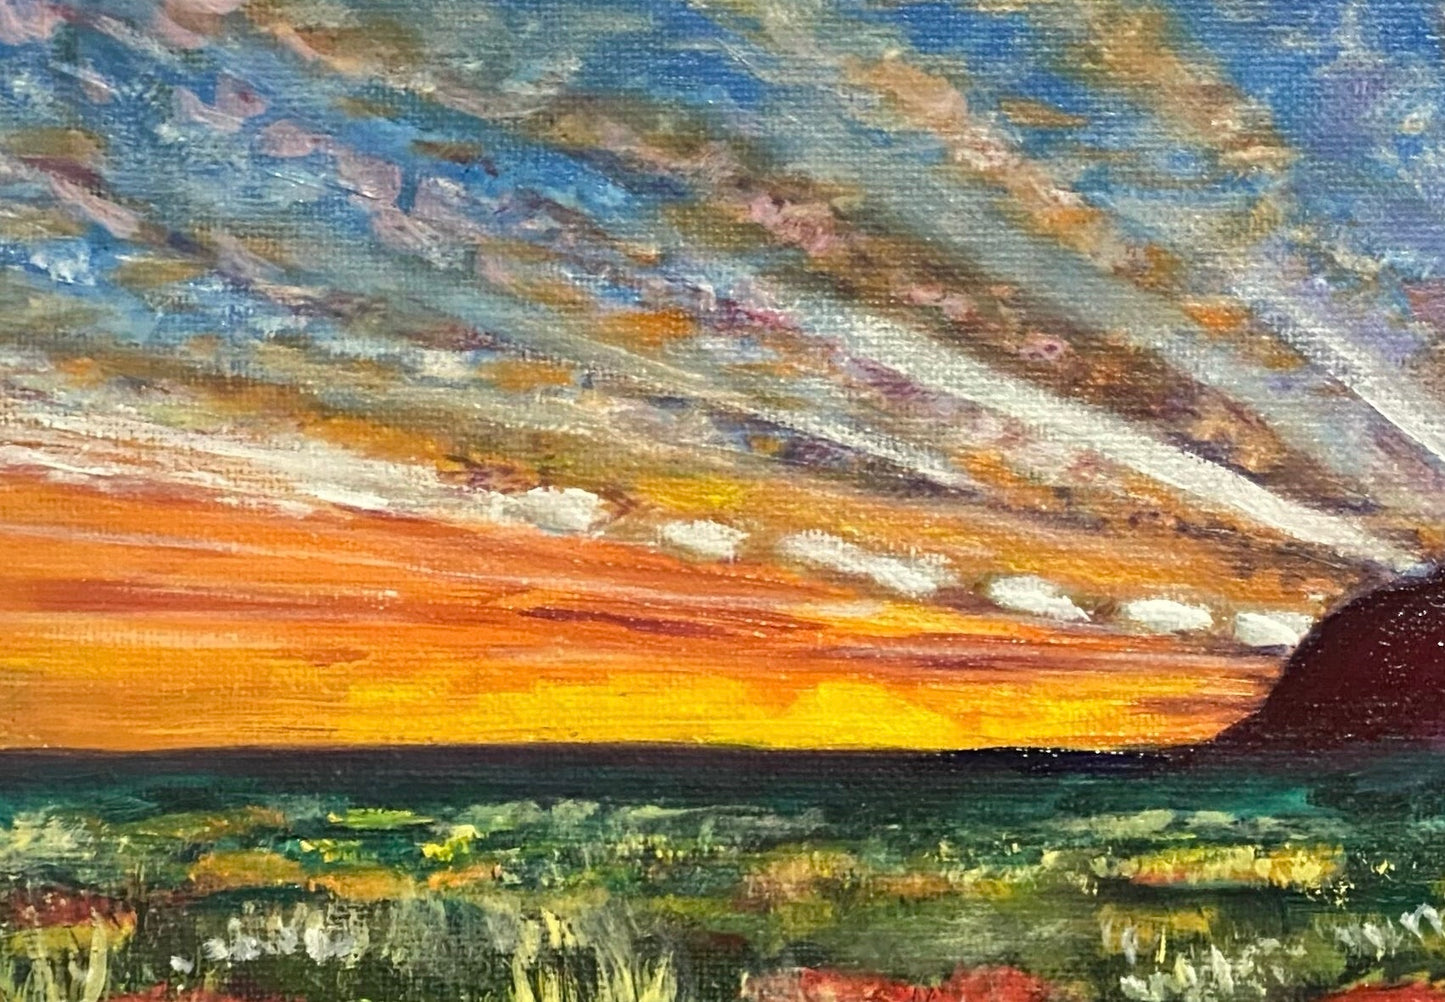 "Uluru at Sunset" Oil on Board - 21cm x 29.7cm / A4 (unframed)